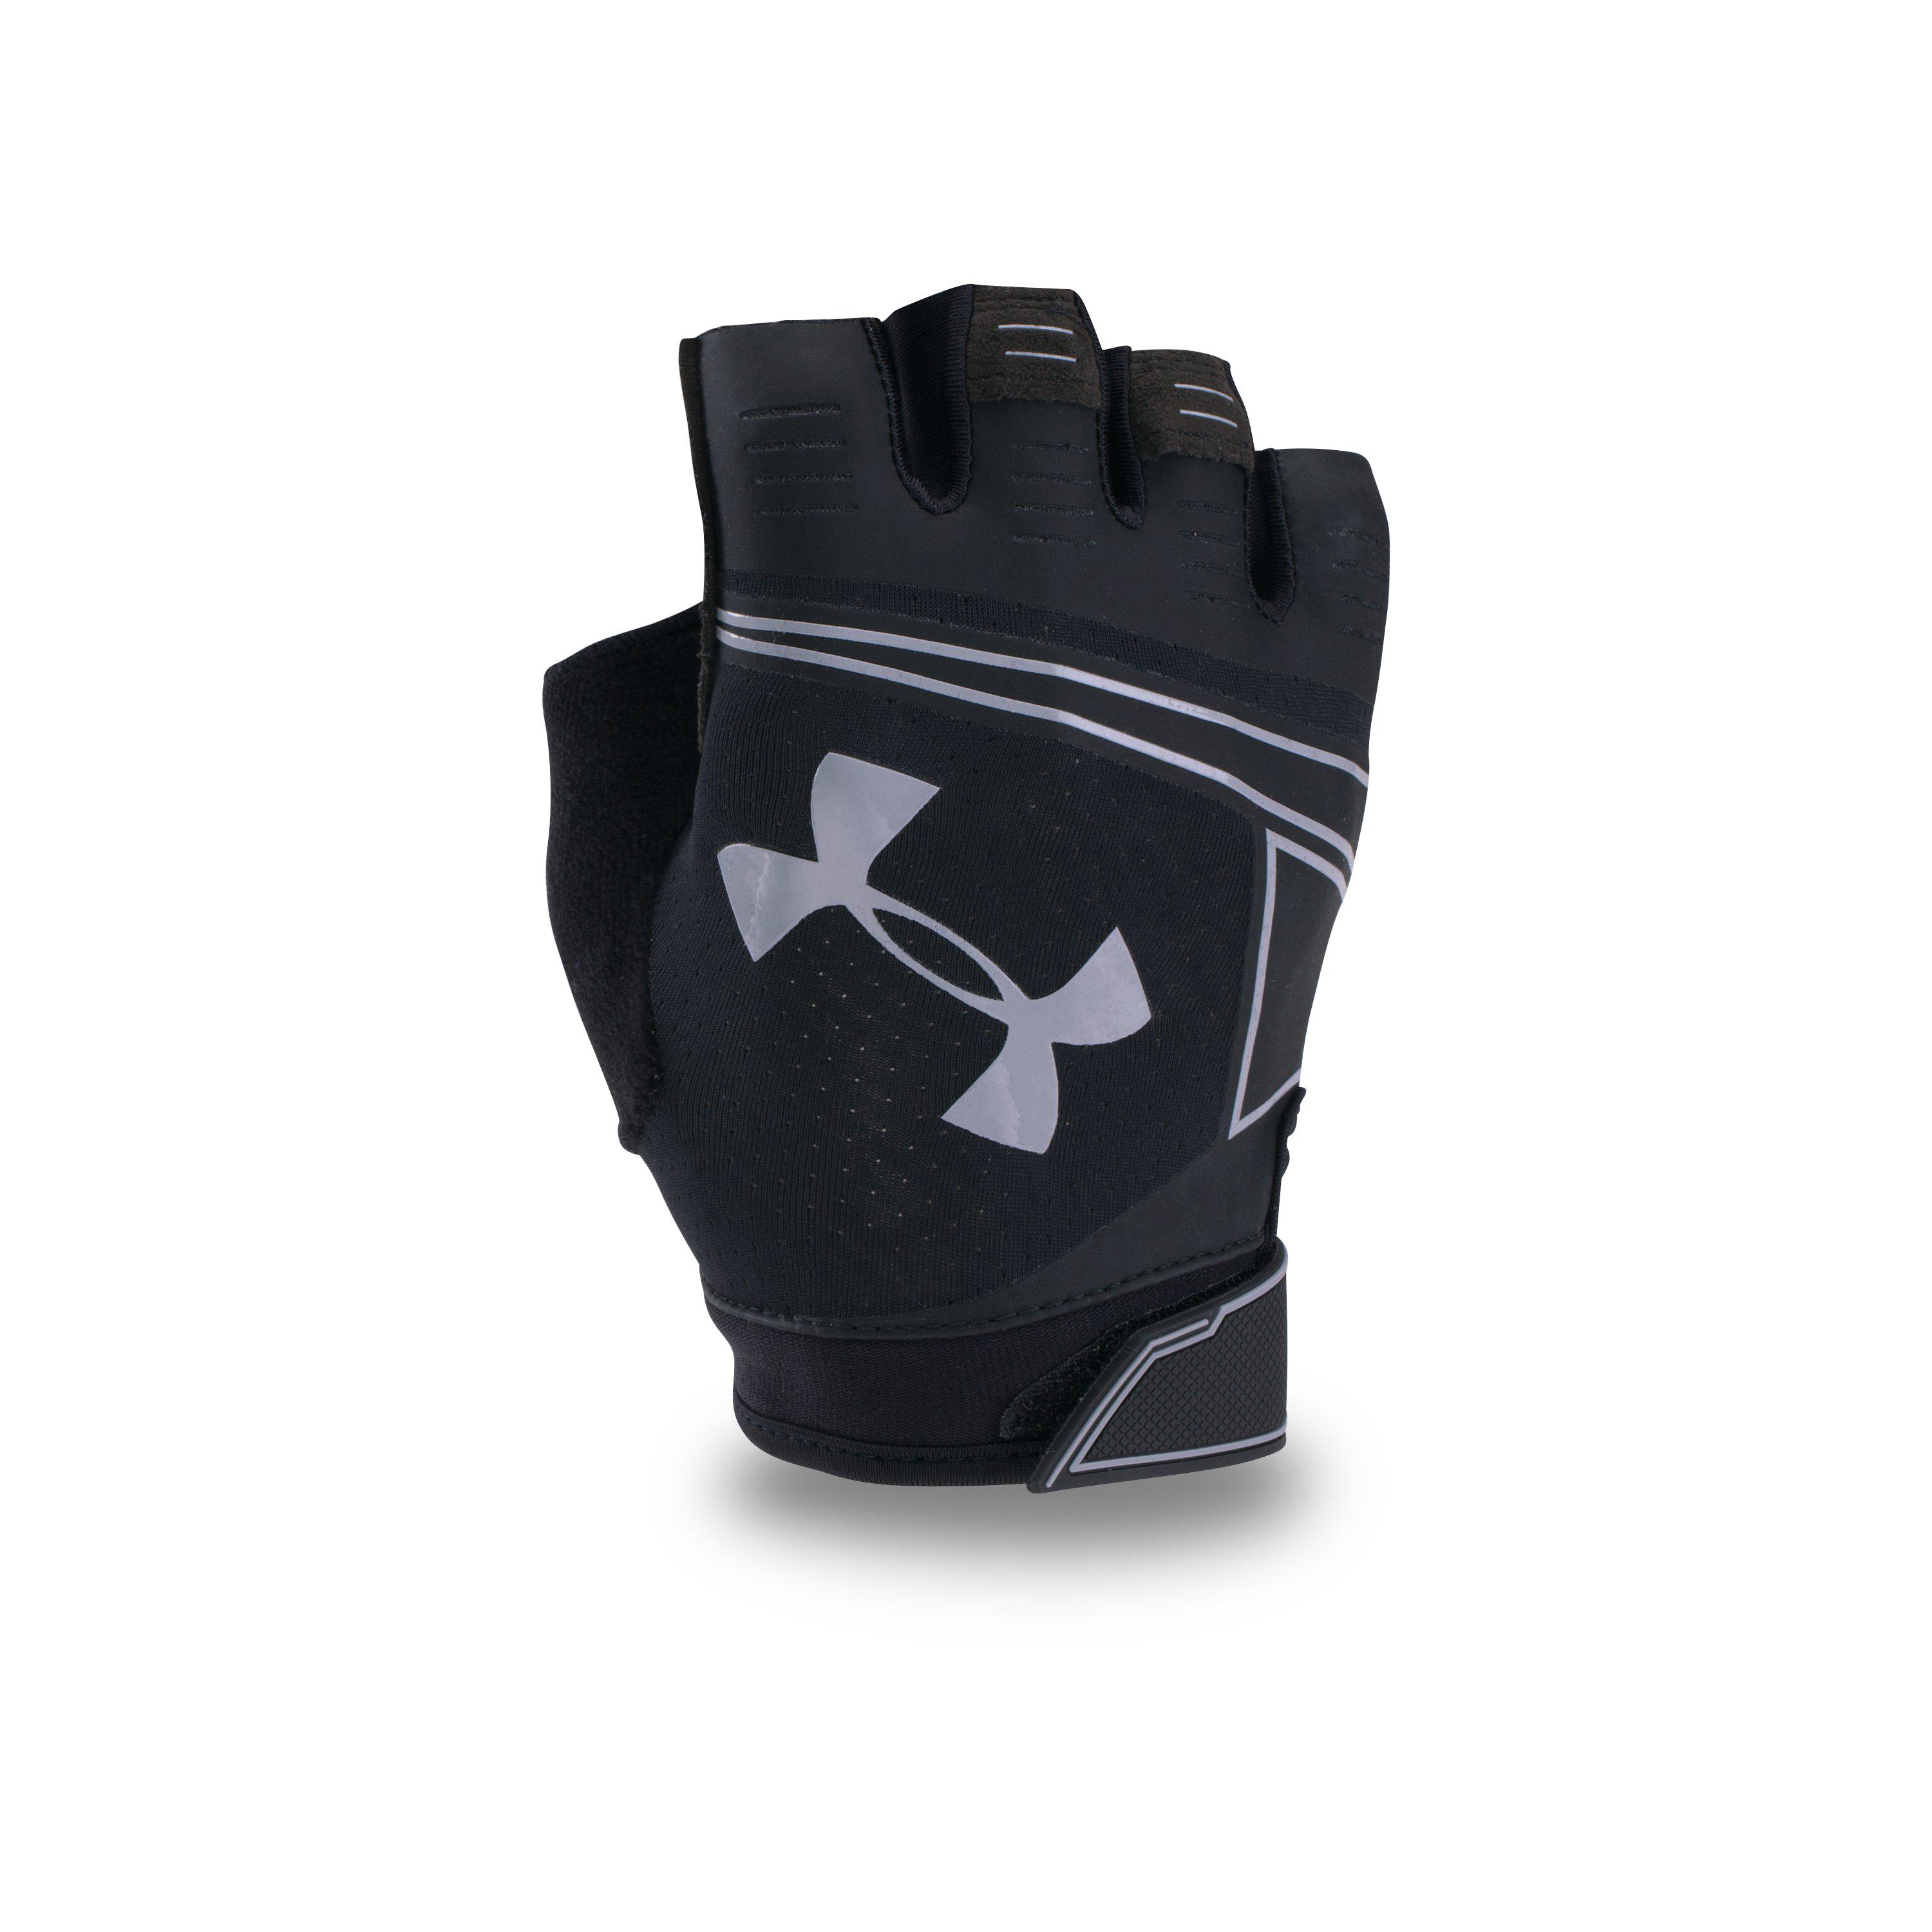 under armor training gloves